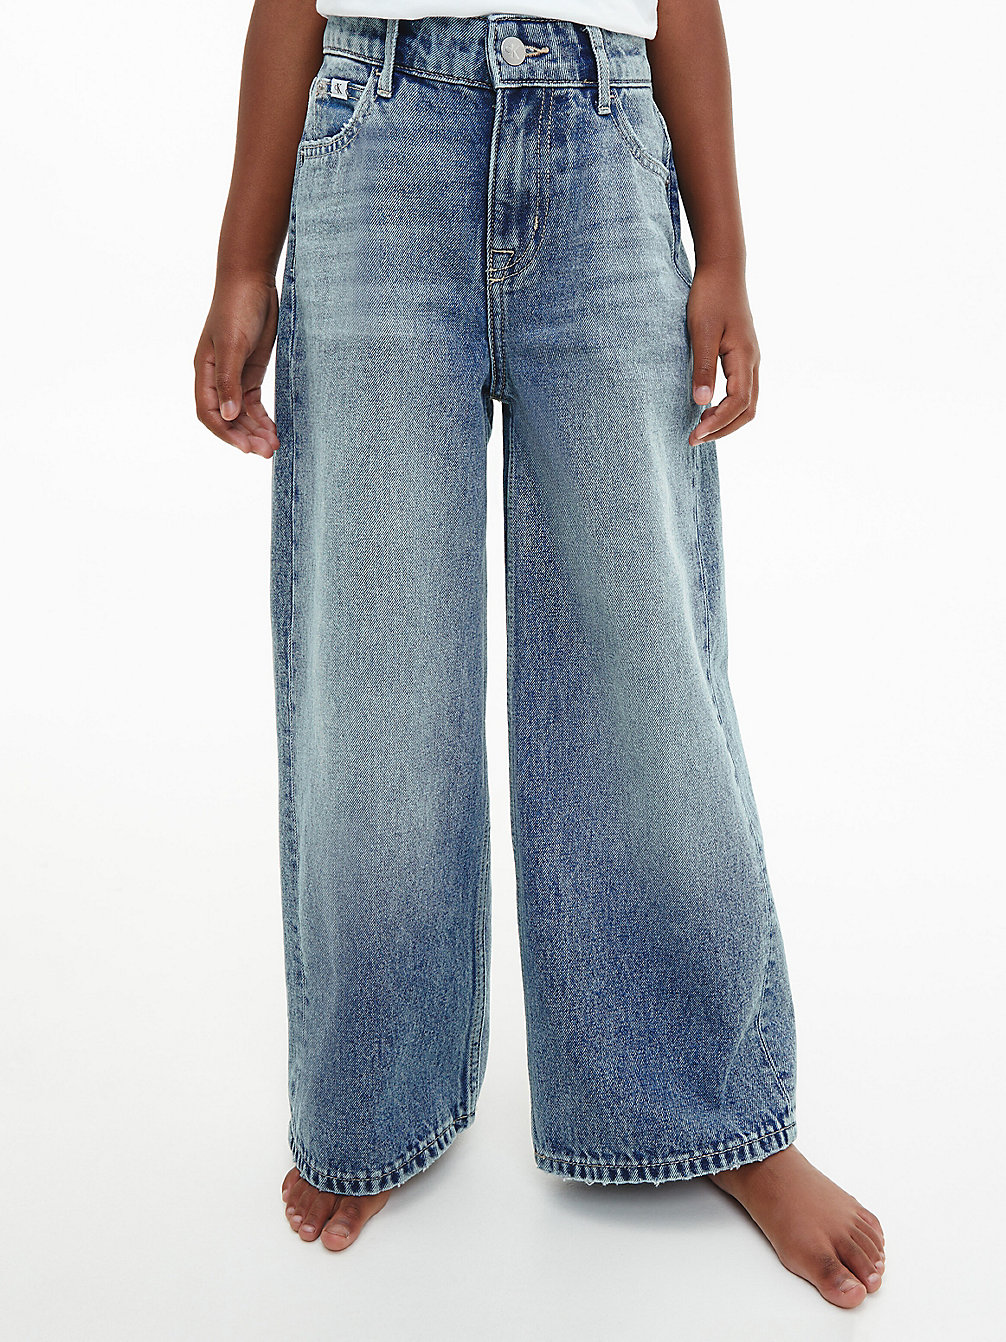 VISUAL LIGHT BLUE Extreme Wide Leg Jeans undefined Maedchen Calvin Klein